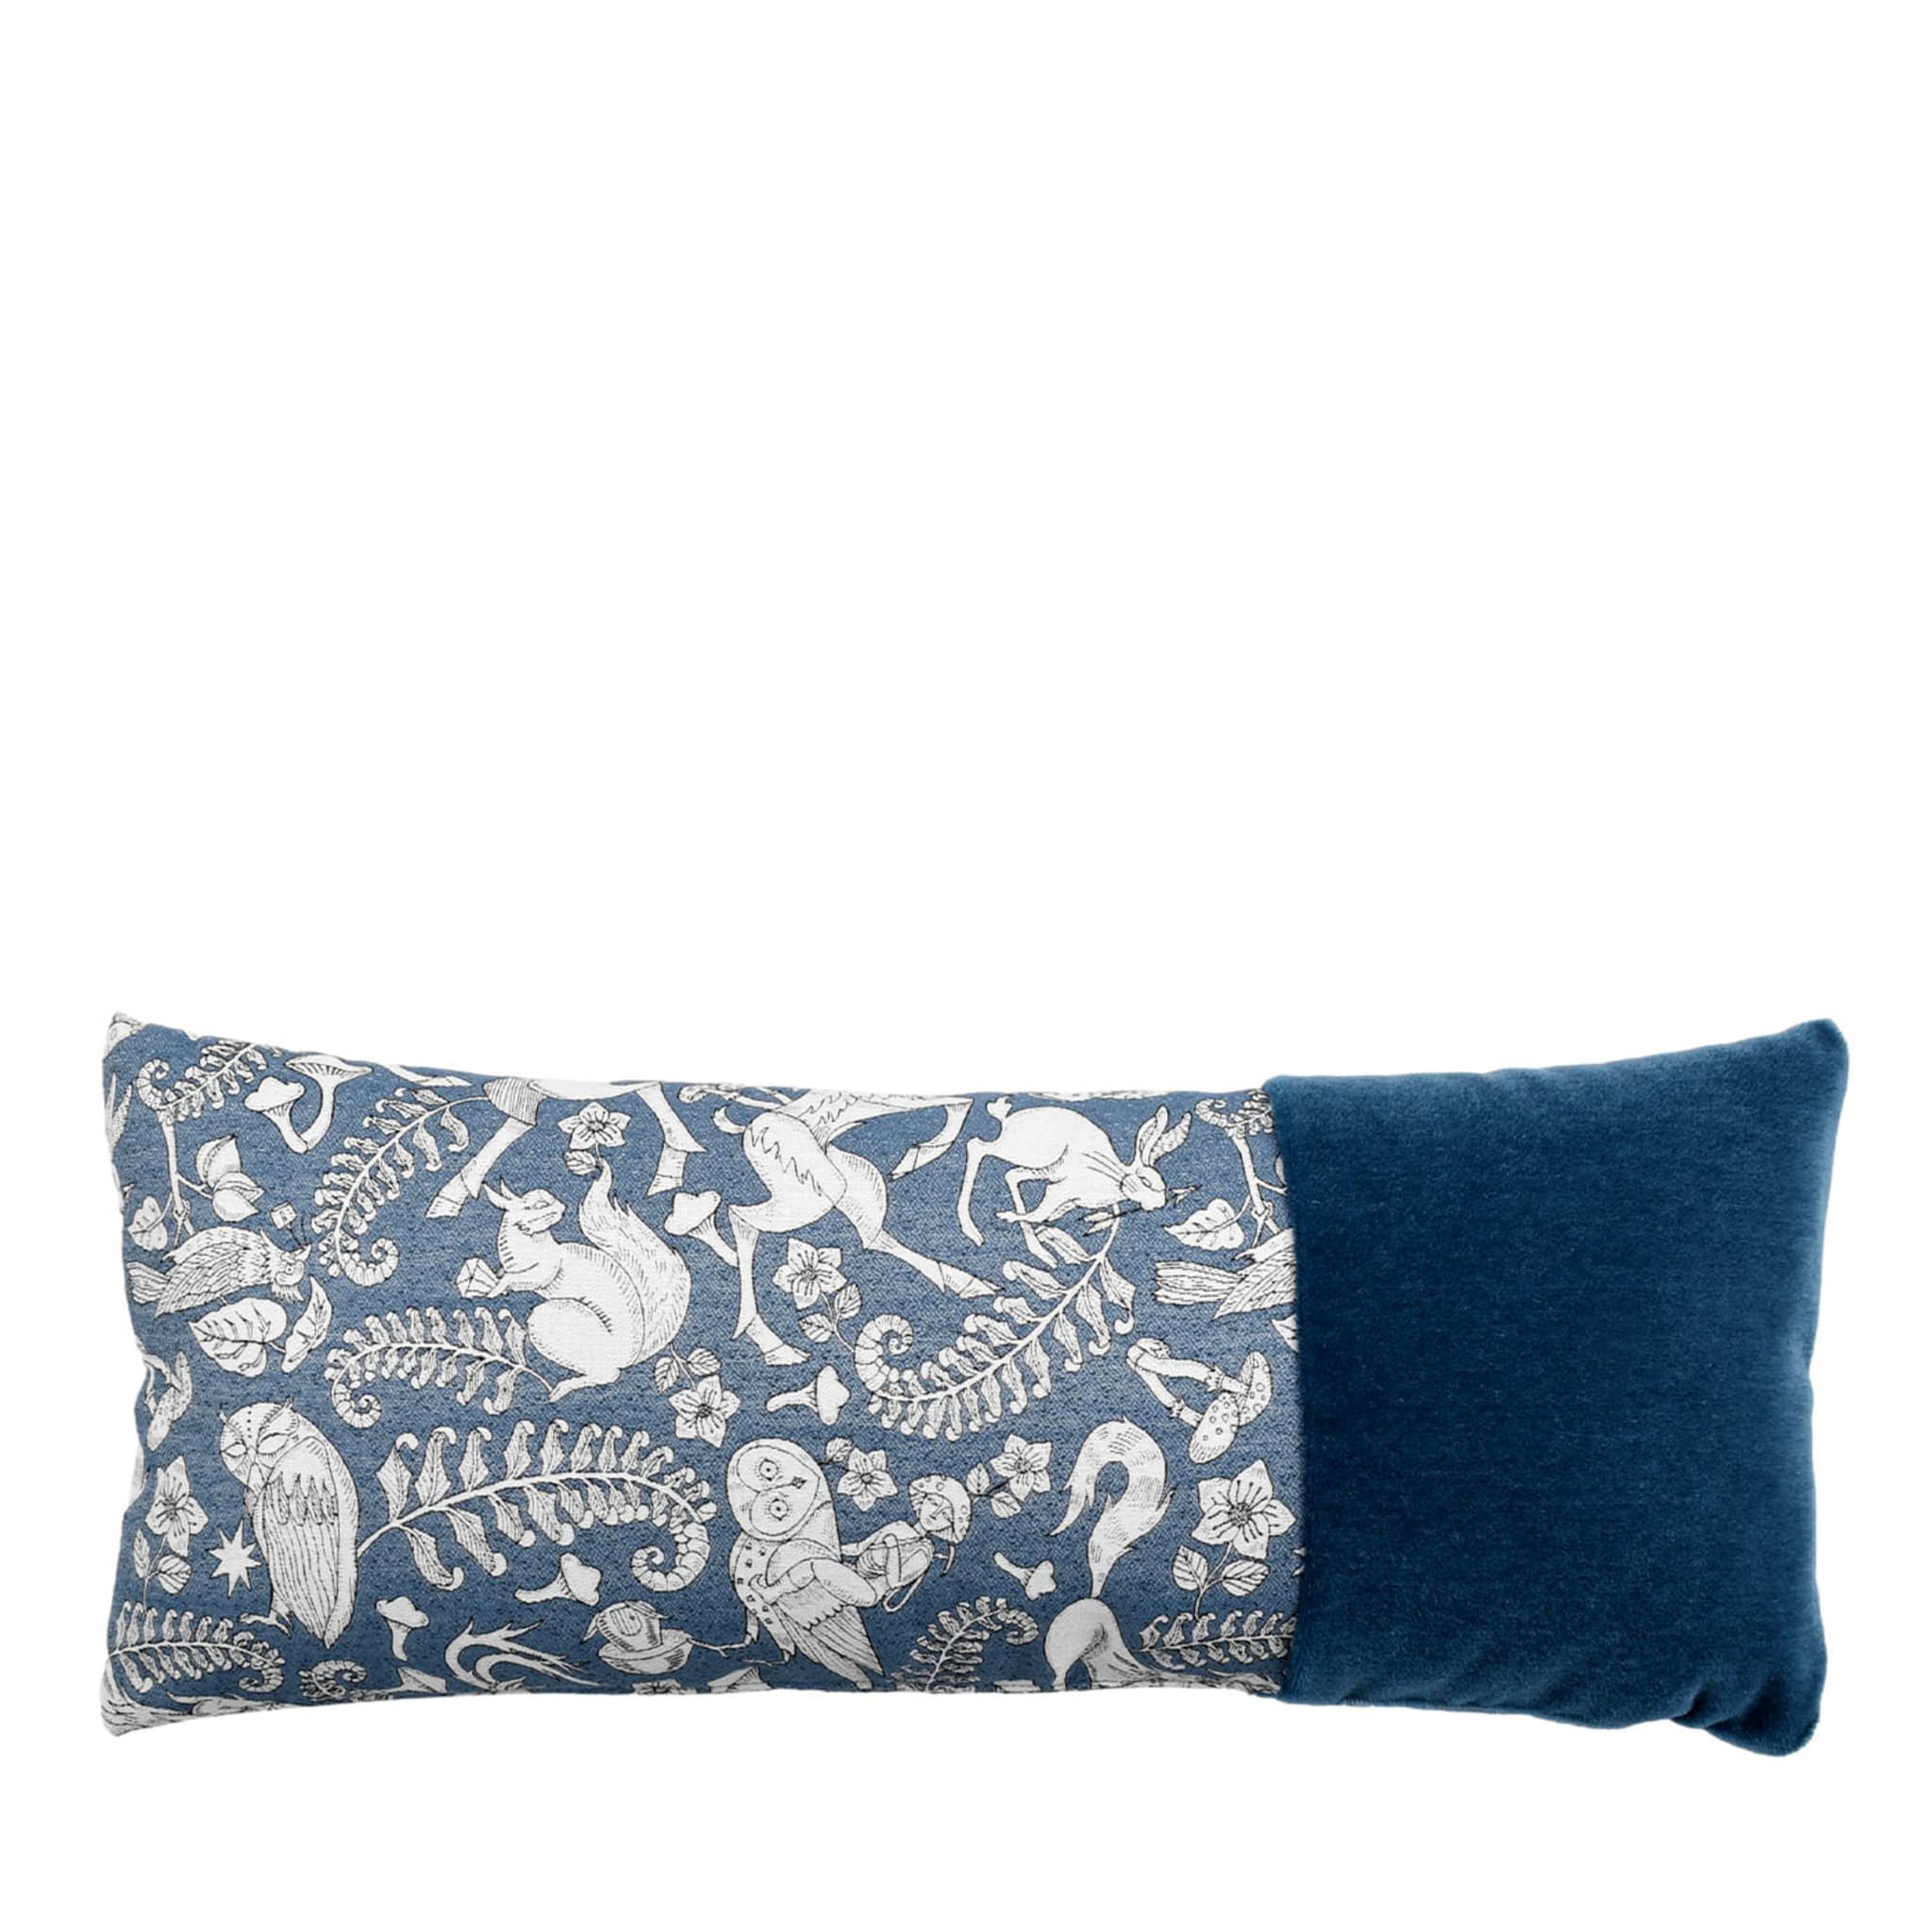 Rectangular Simple Cushion in Montagna Magica jacquard fabric - Main view